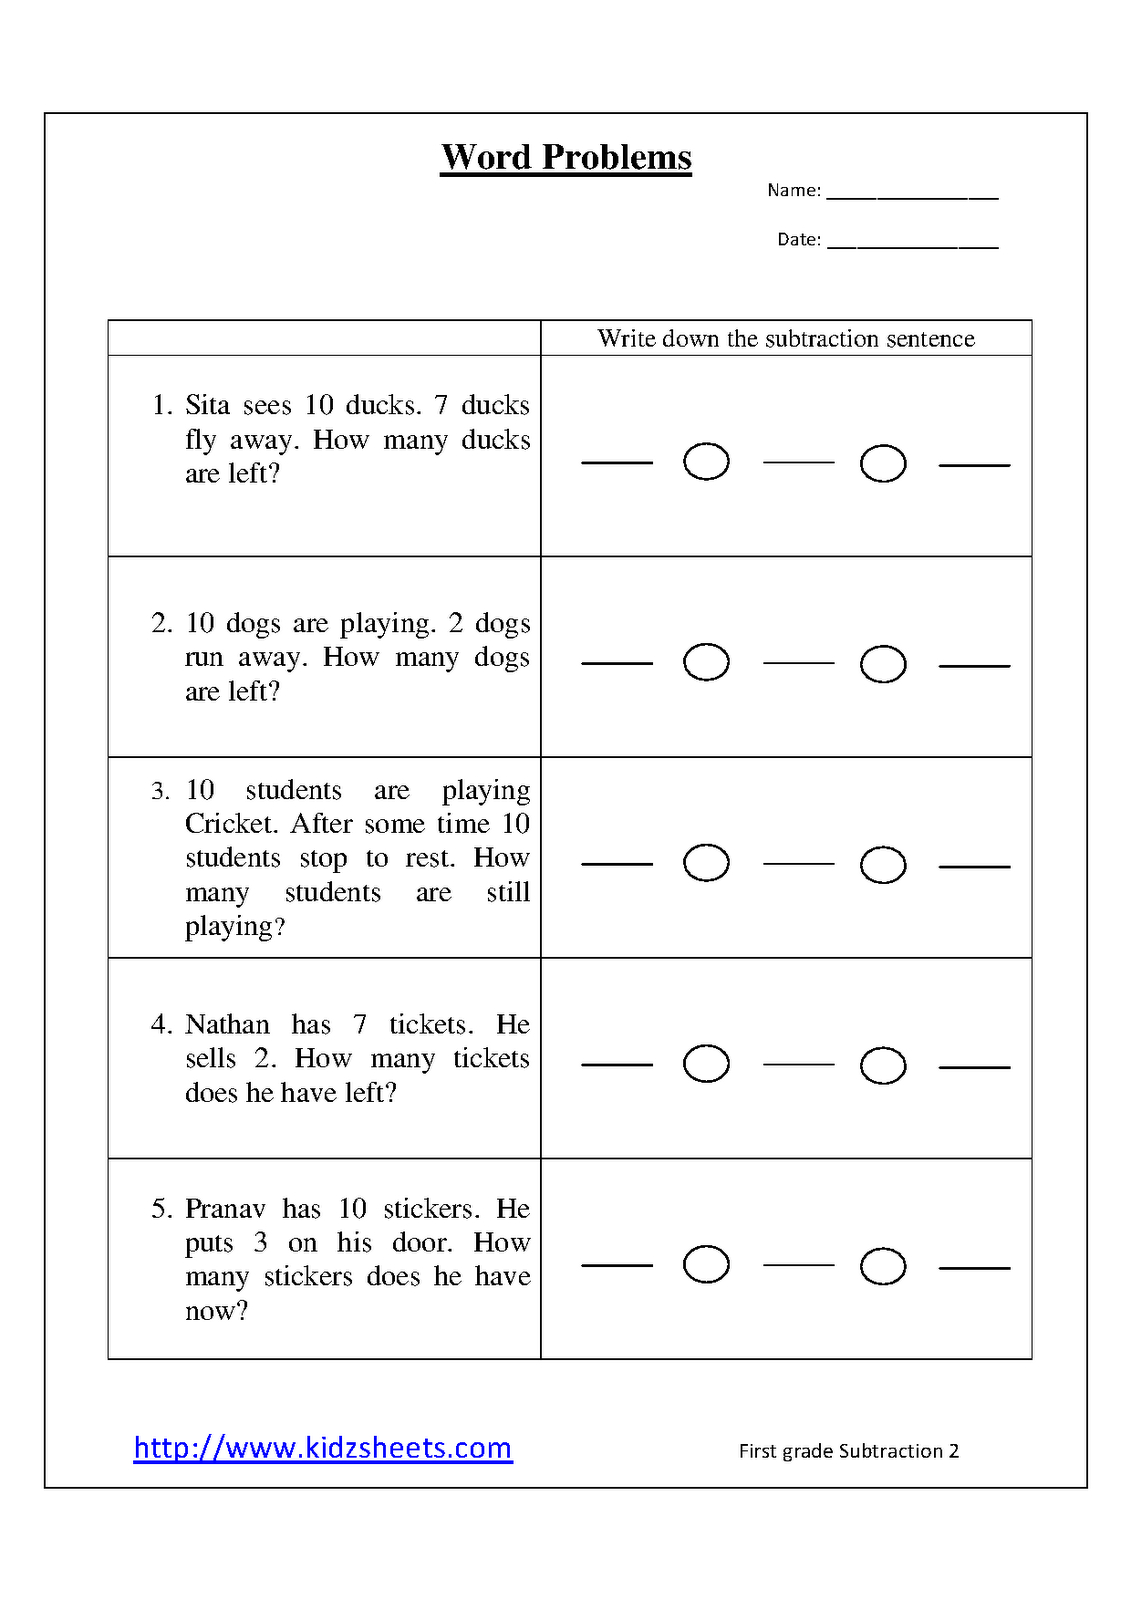 Kidz Worksheets: First Grade Word Problems2 - Free Printable Math Worksheets Word Problems First Grade